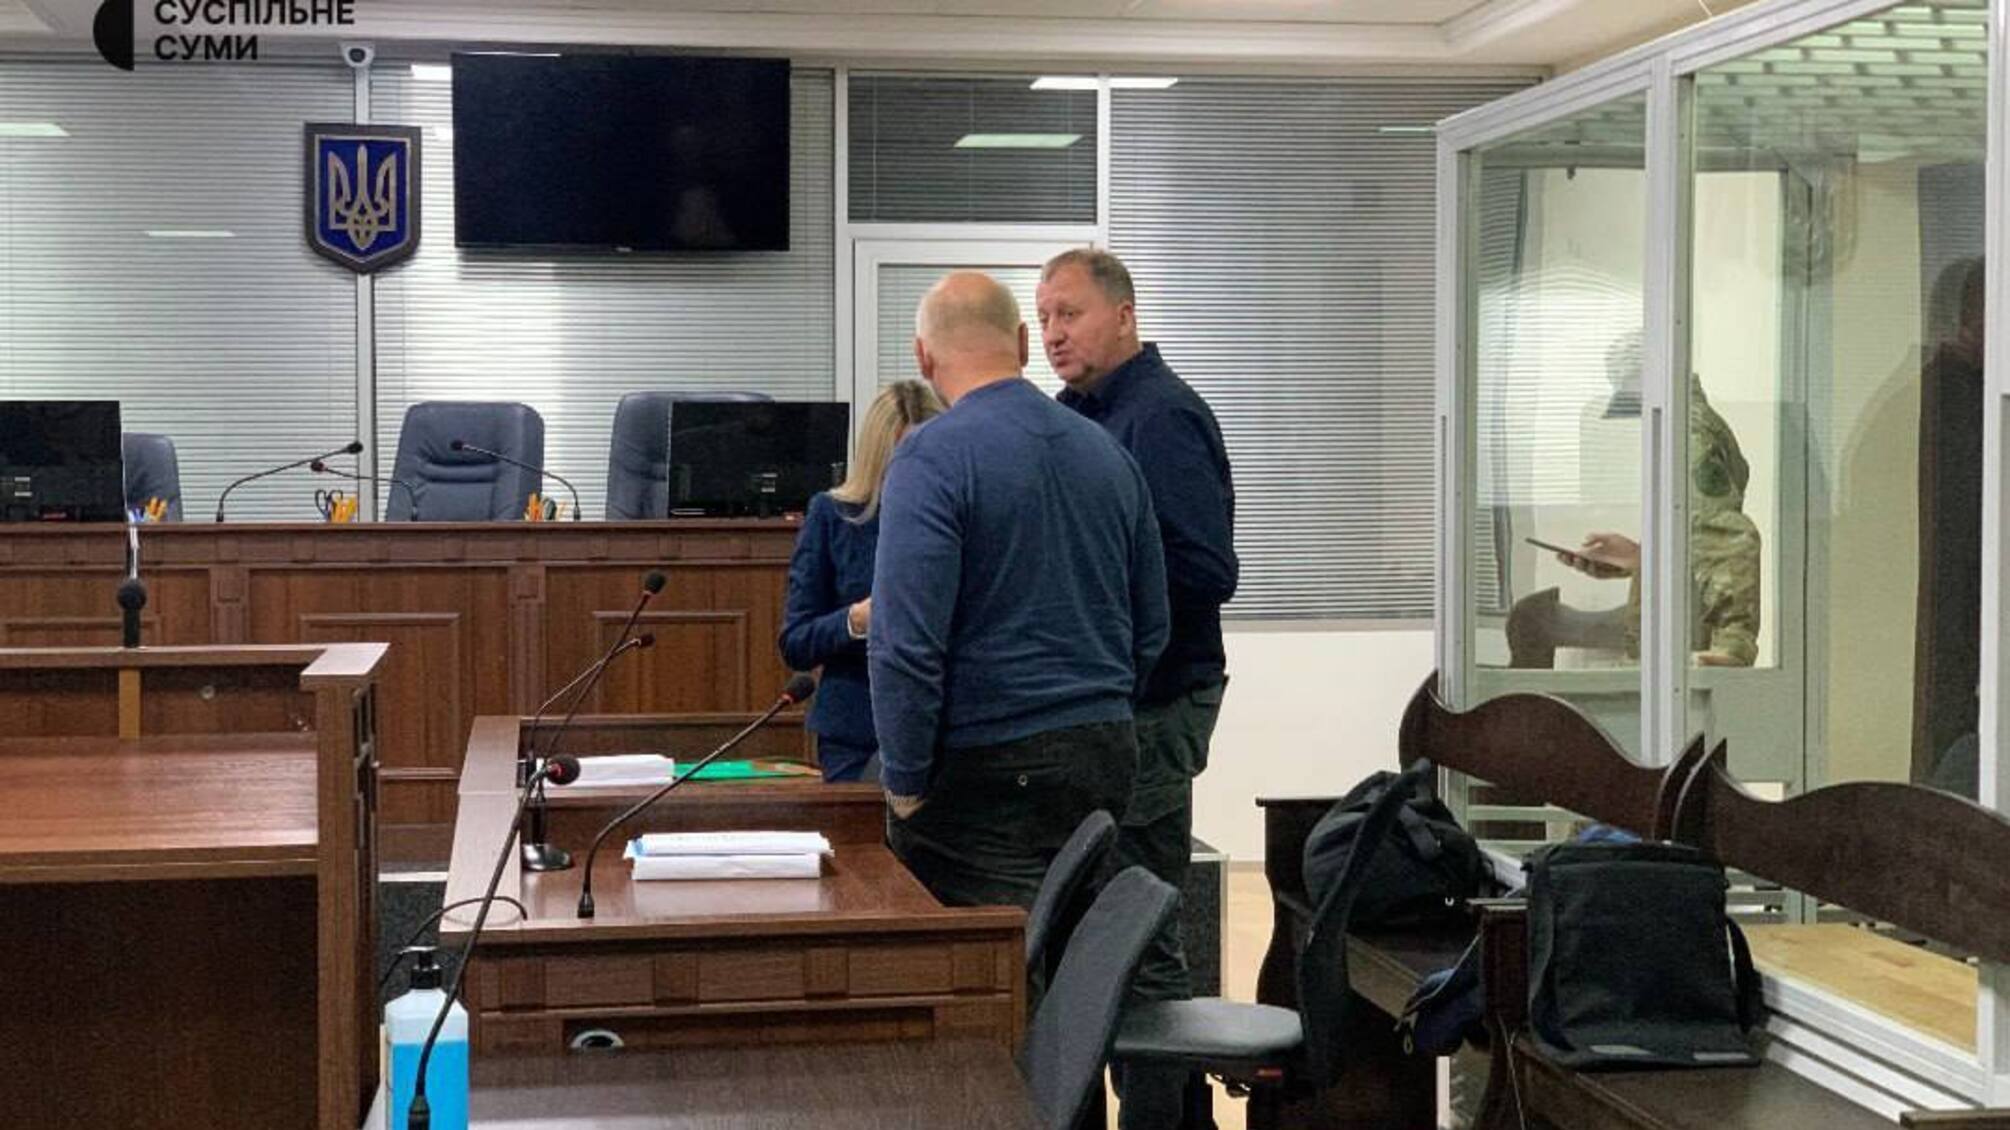 Суд отправил мэра Сум в СИЗО на два месяца с возможностью внесения залога 3 млн грн: Лысенко отрицает обвинение